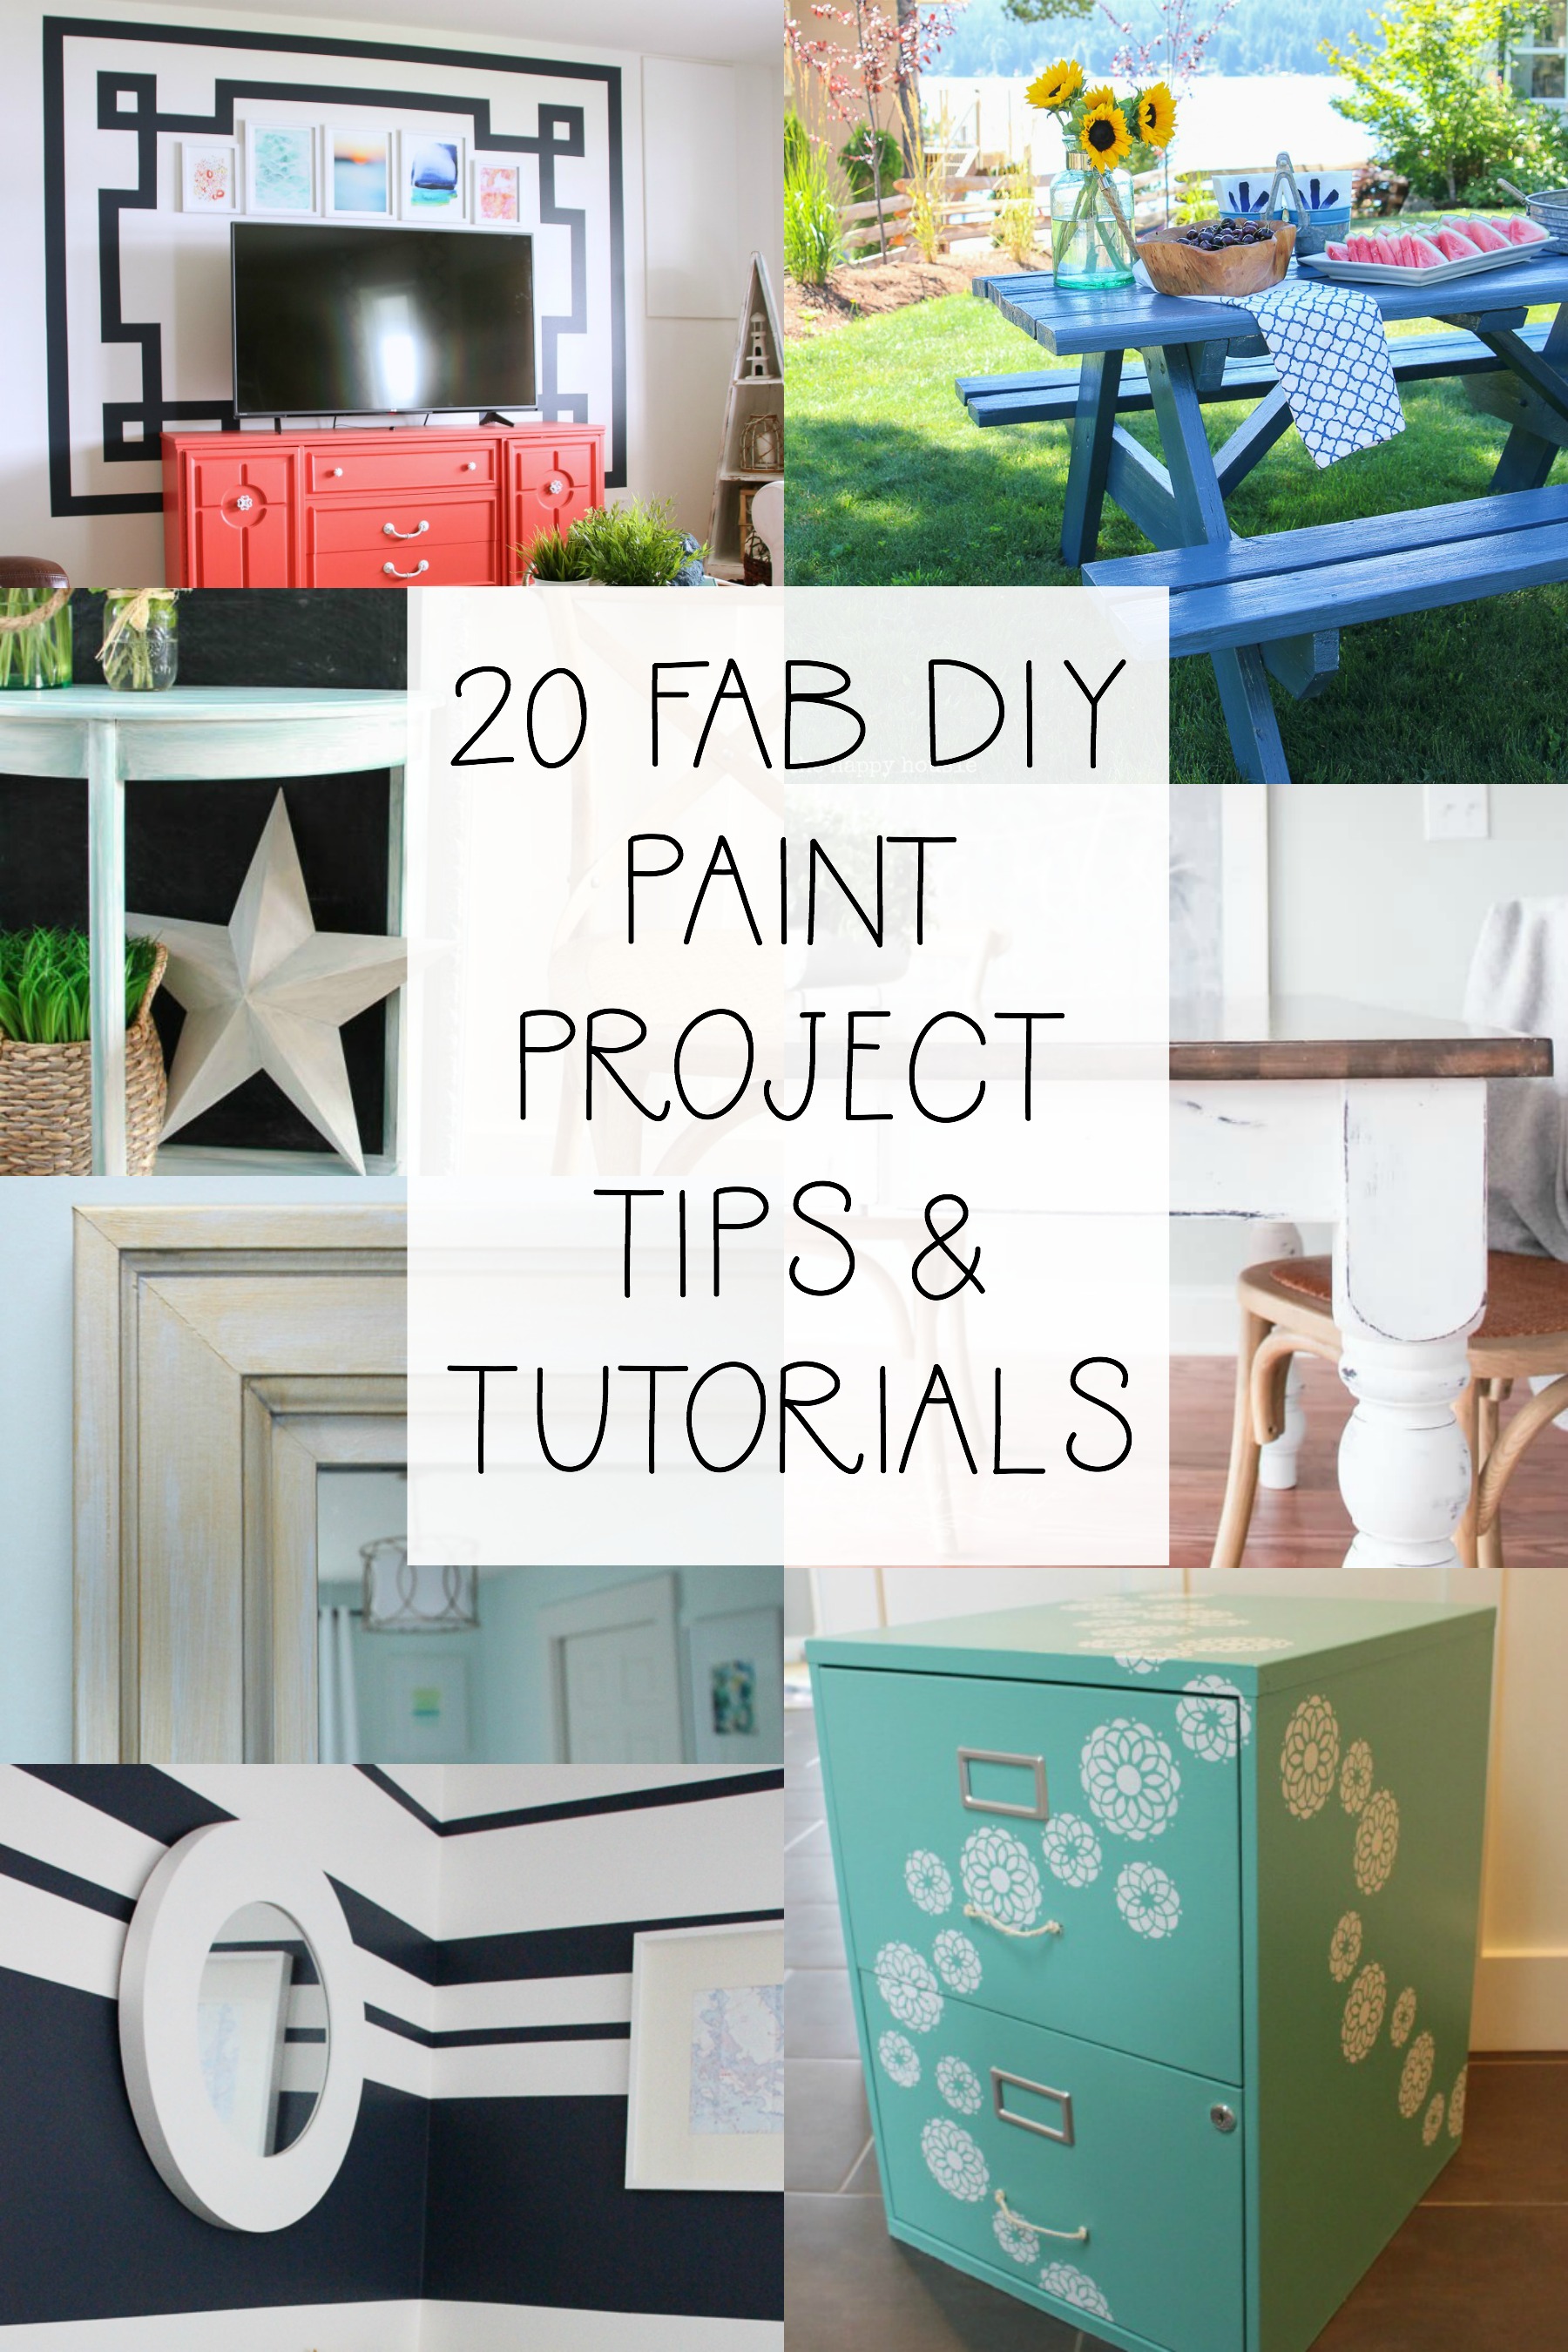 20 Fab DIY Paint Project Tips & Tutorials poster.